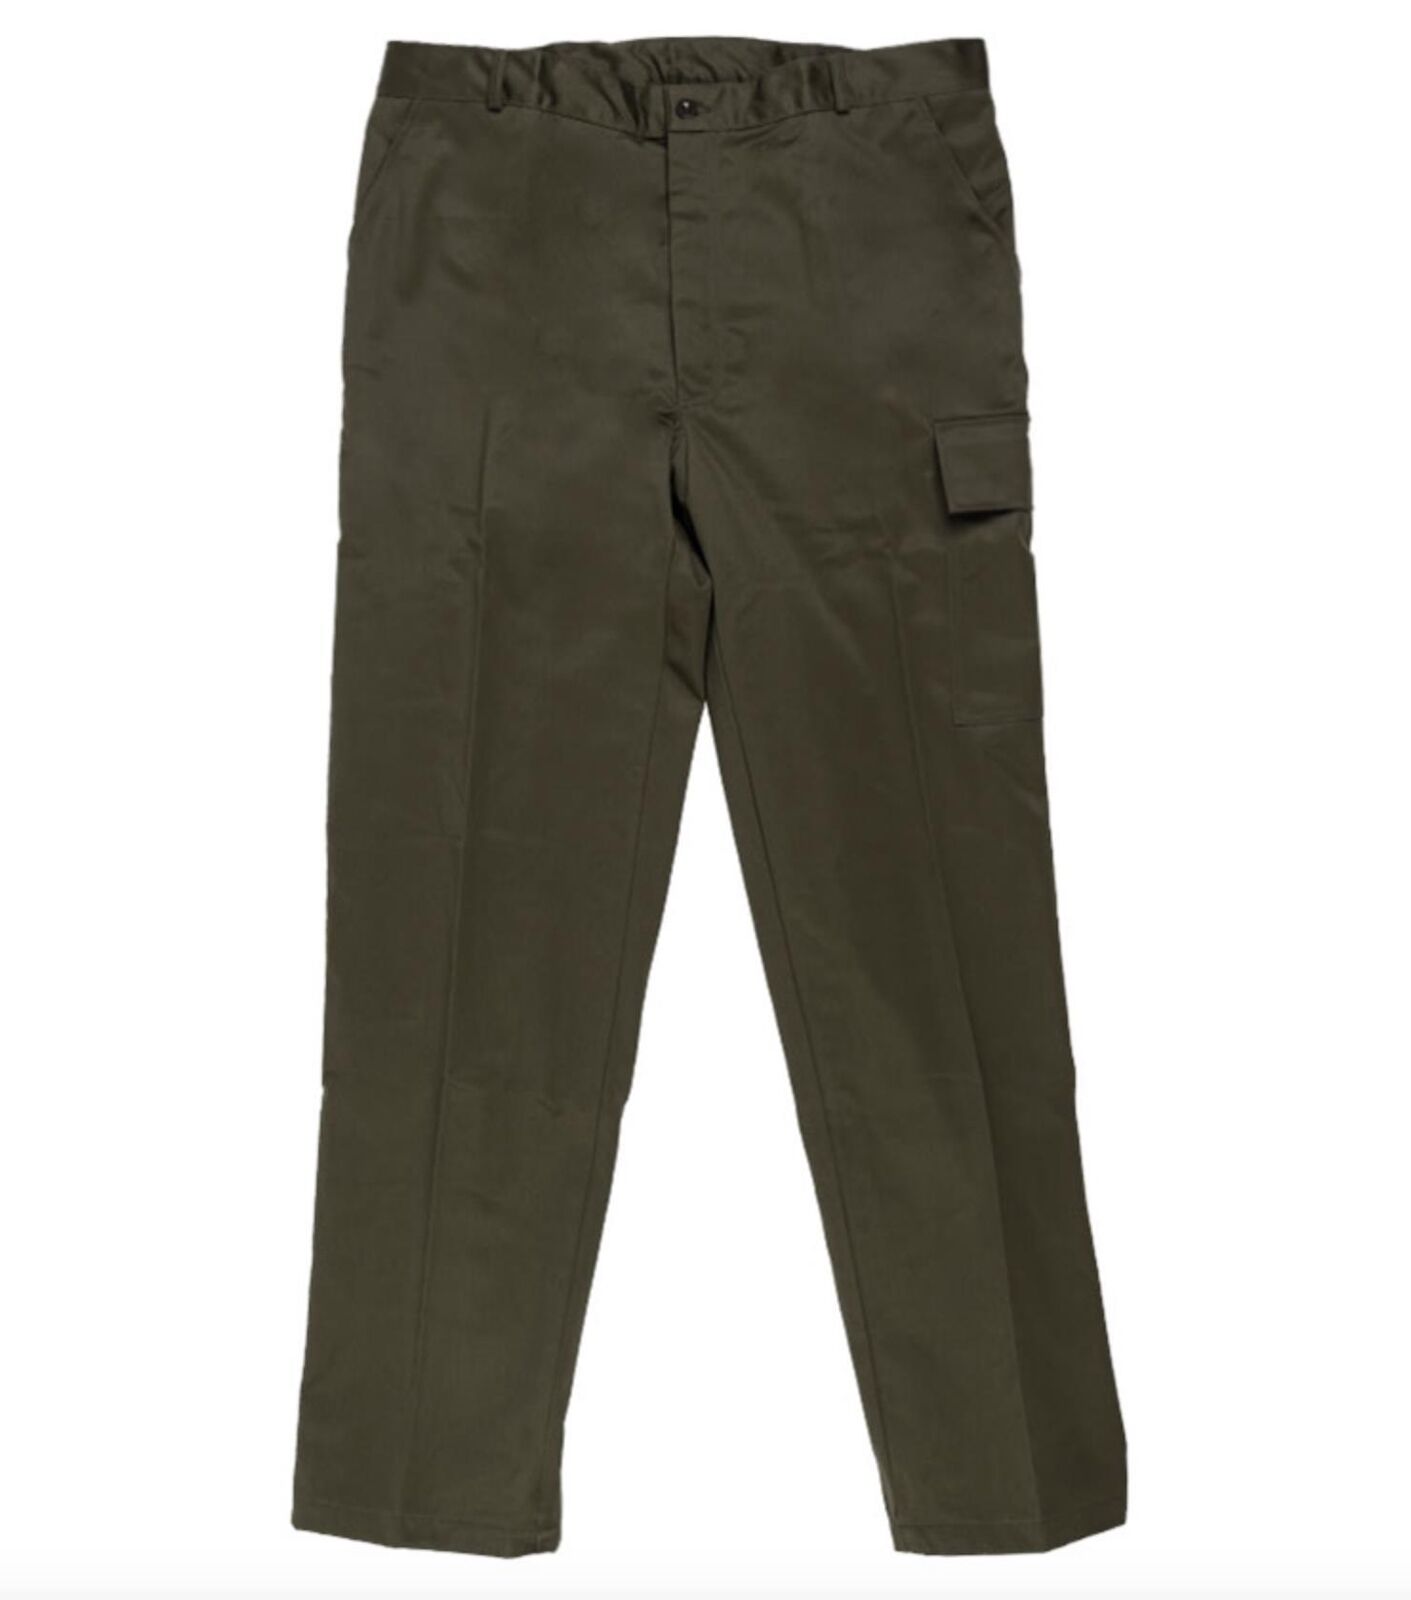 Genuine Belgian Army Surplus Field Uniform Trousers Pants Seyntex